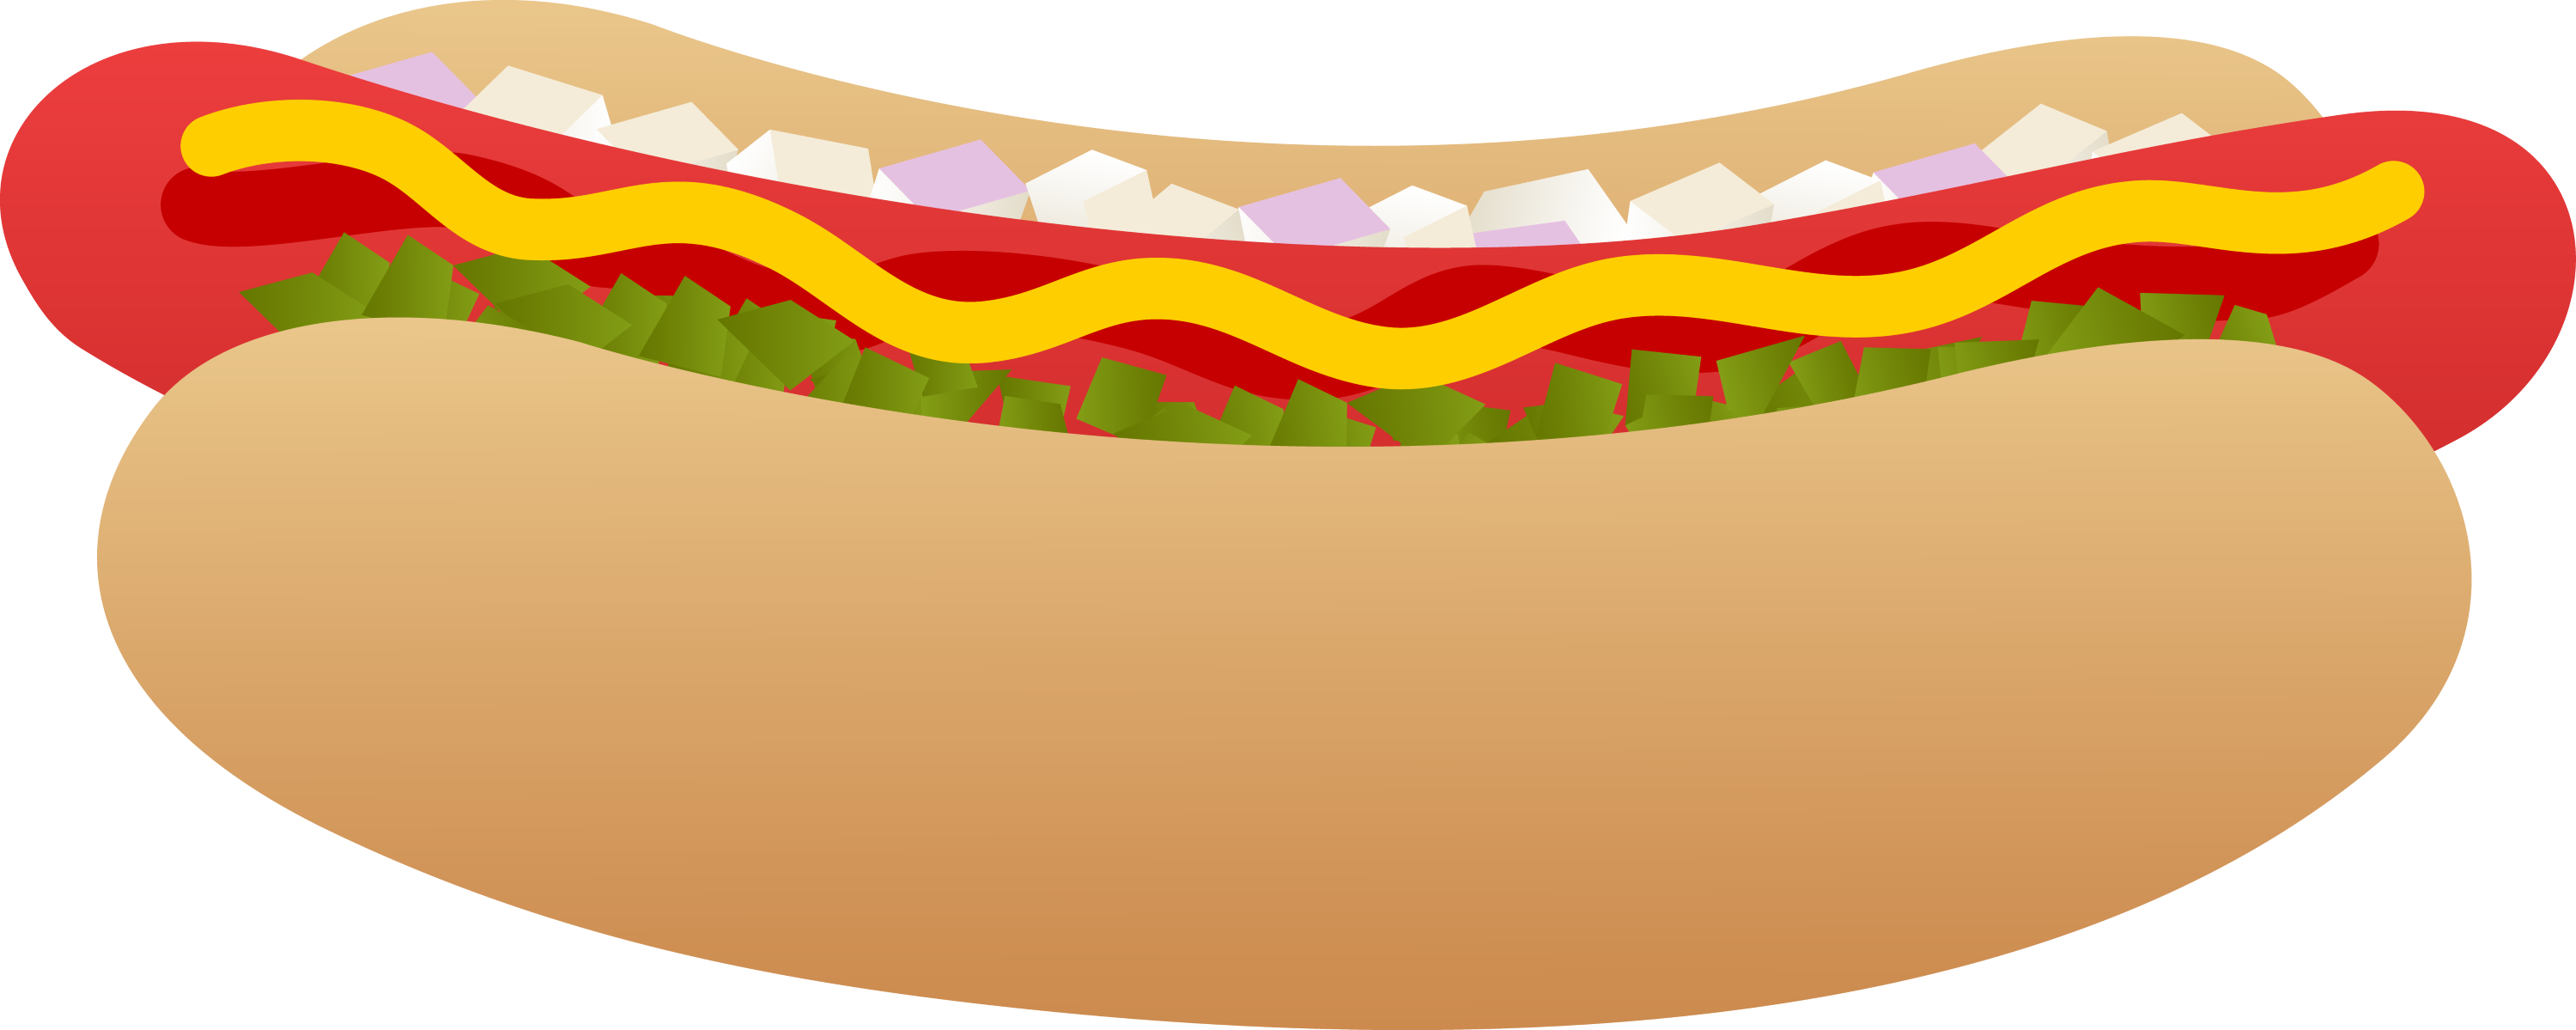 hot dog clipart free - photo #13